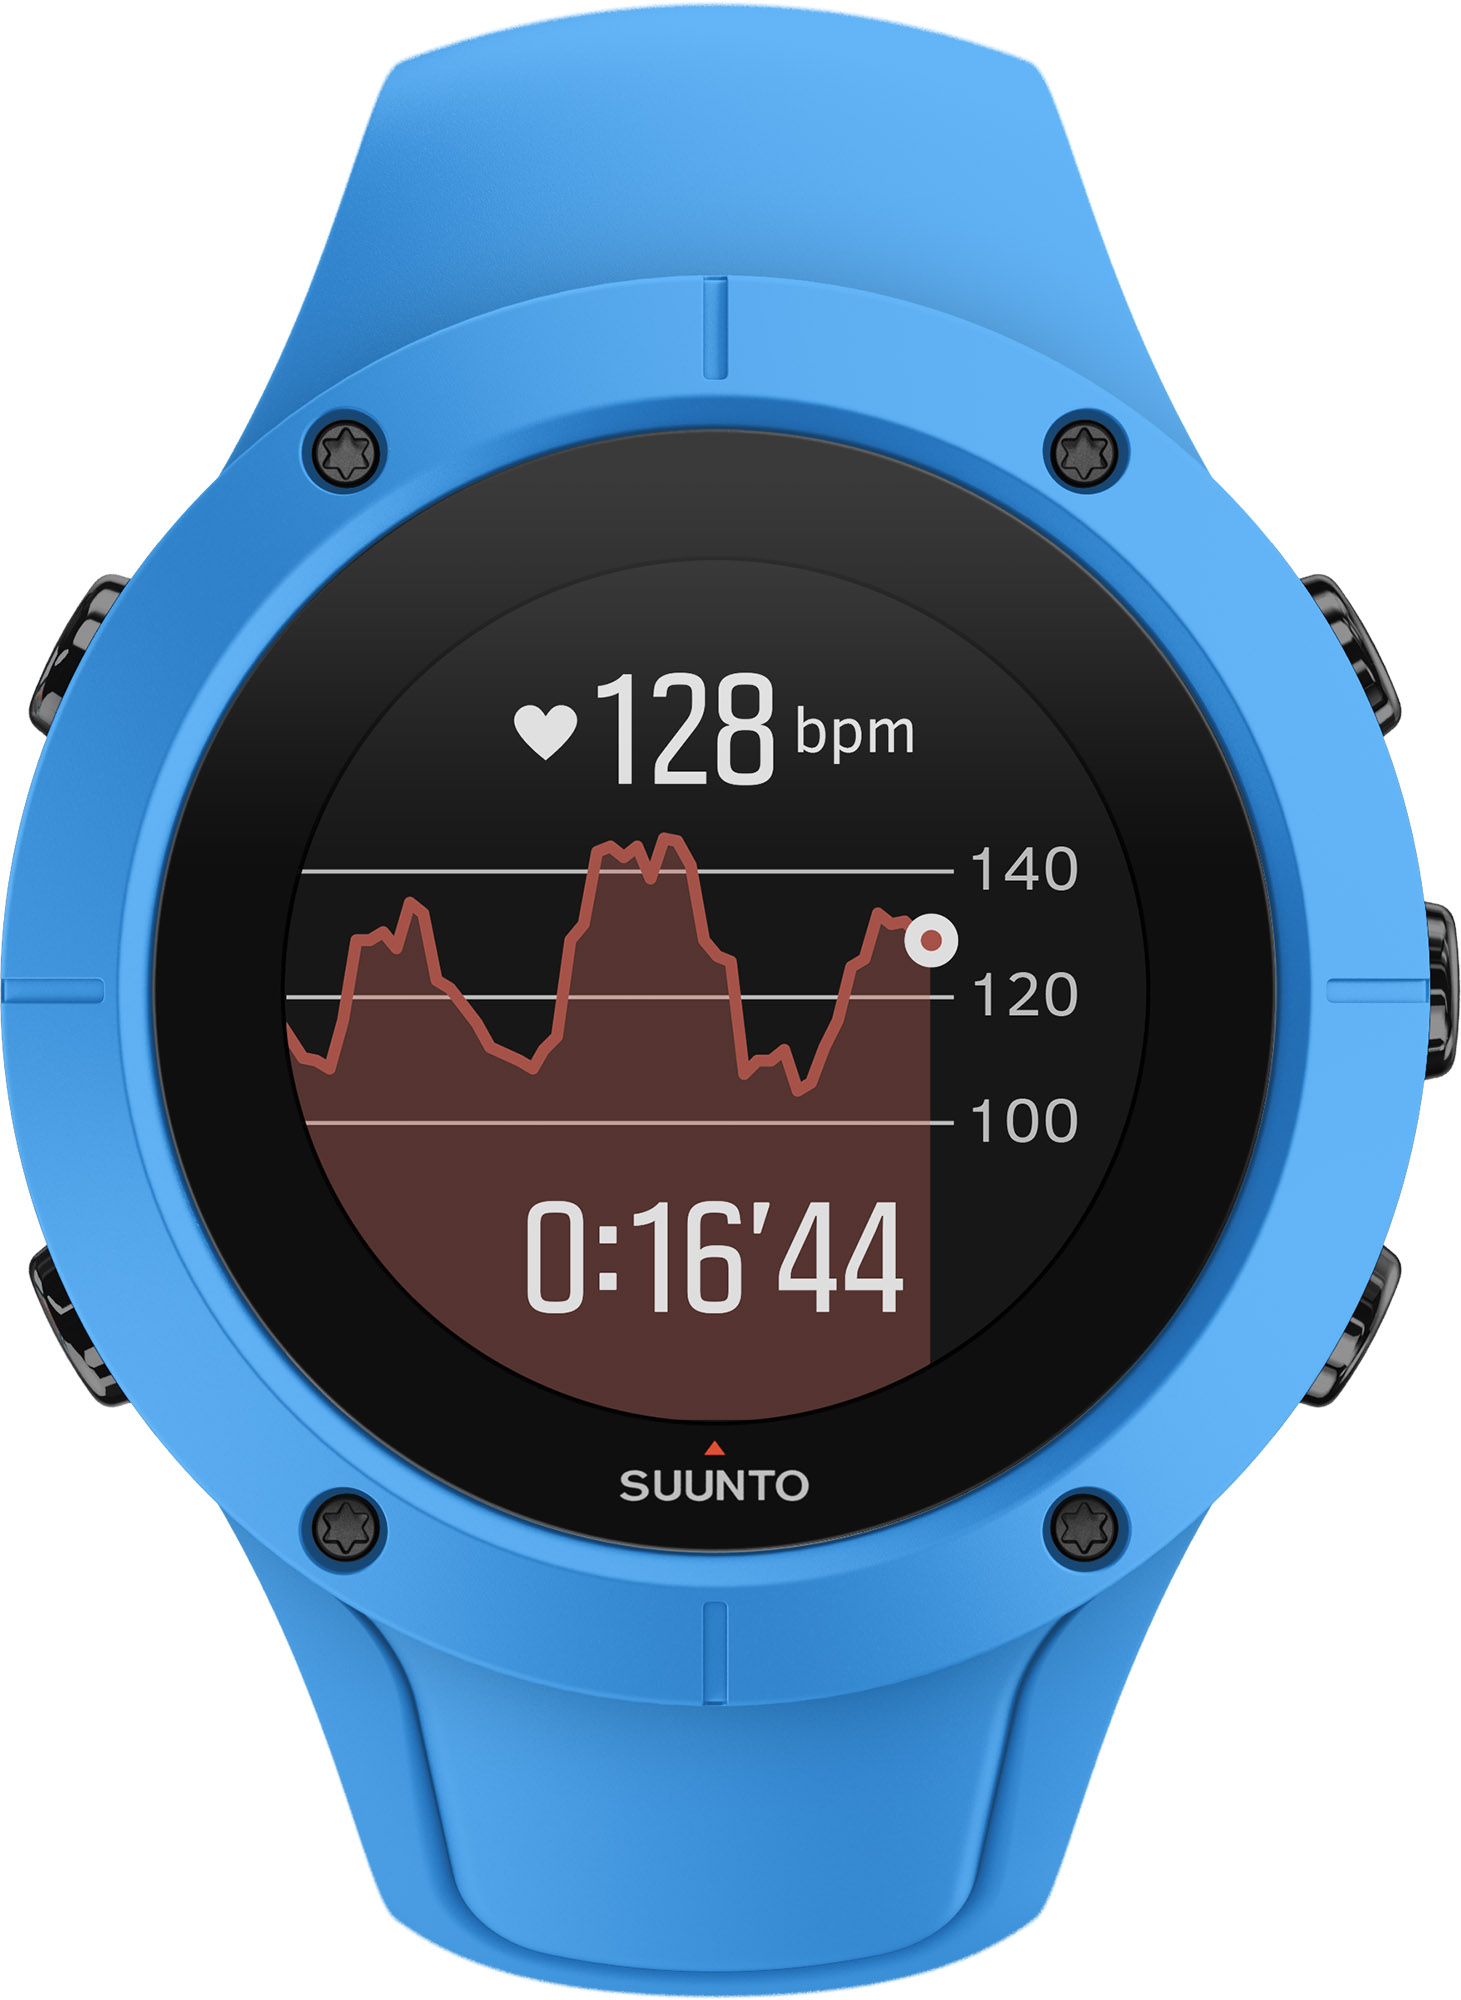 Lightweight multi-sports watch with GPS